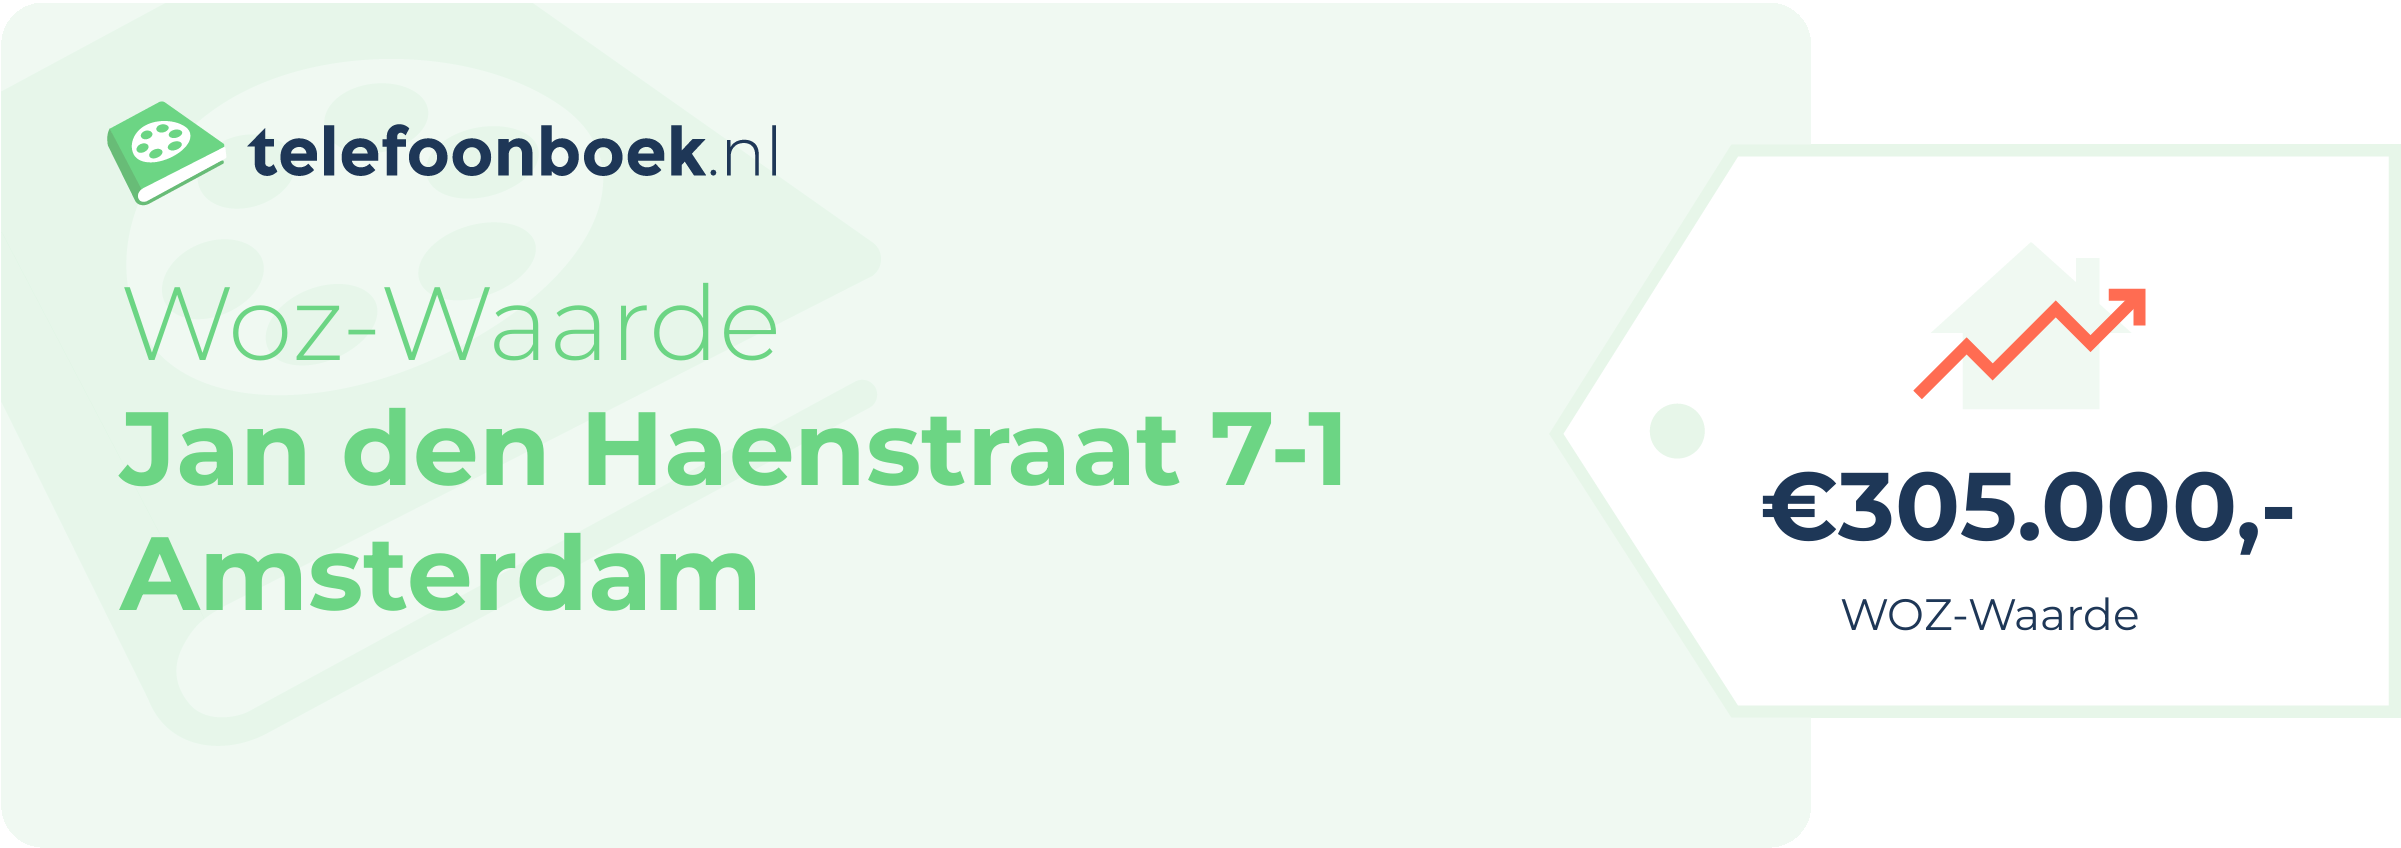 WOZ-waarde Jan Den Haenstraat 7-1 Amsterdam